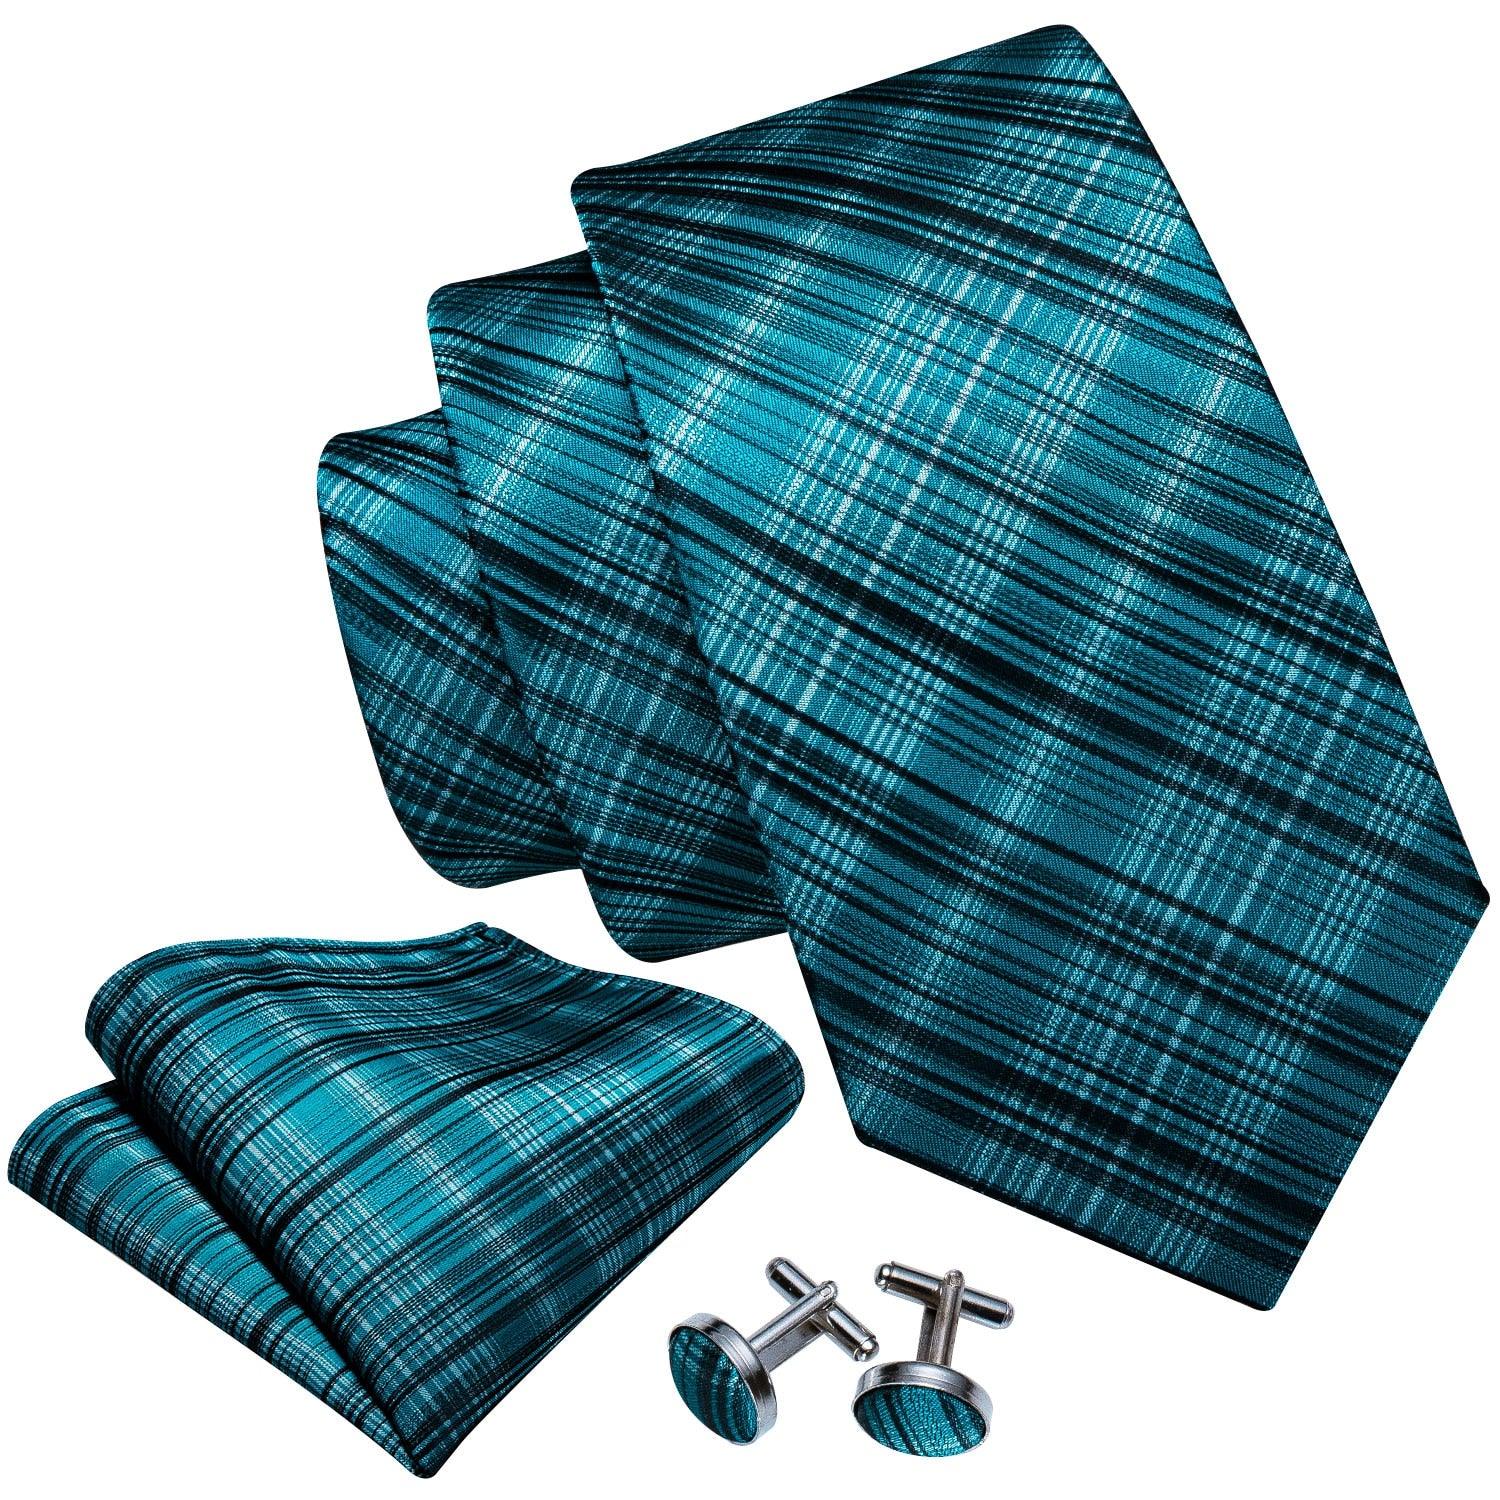 Men's Accessories - Ties Classic Teal Stripe Ties For Men Elegant Silk High Quality